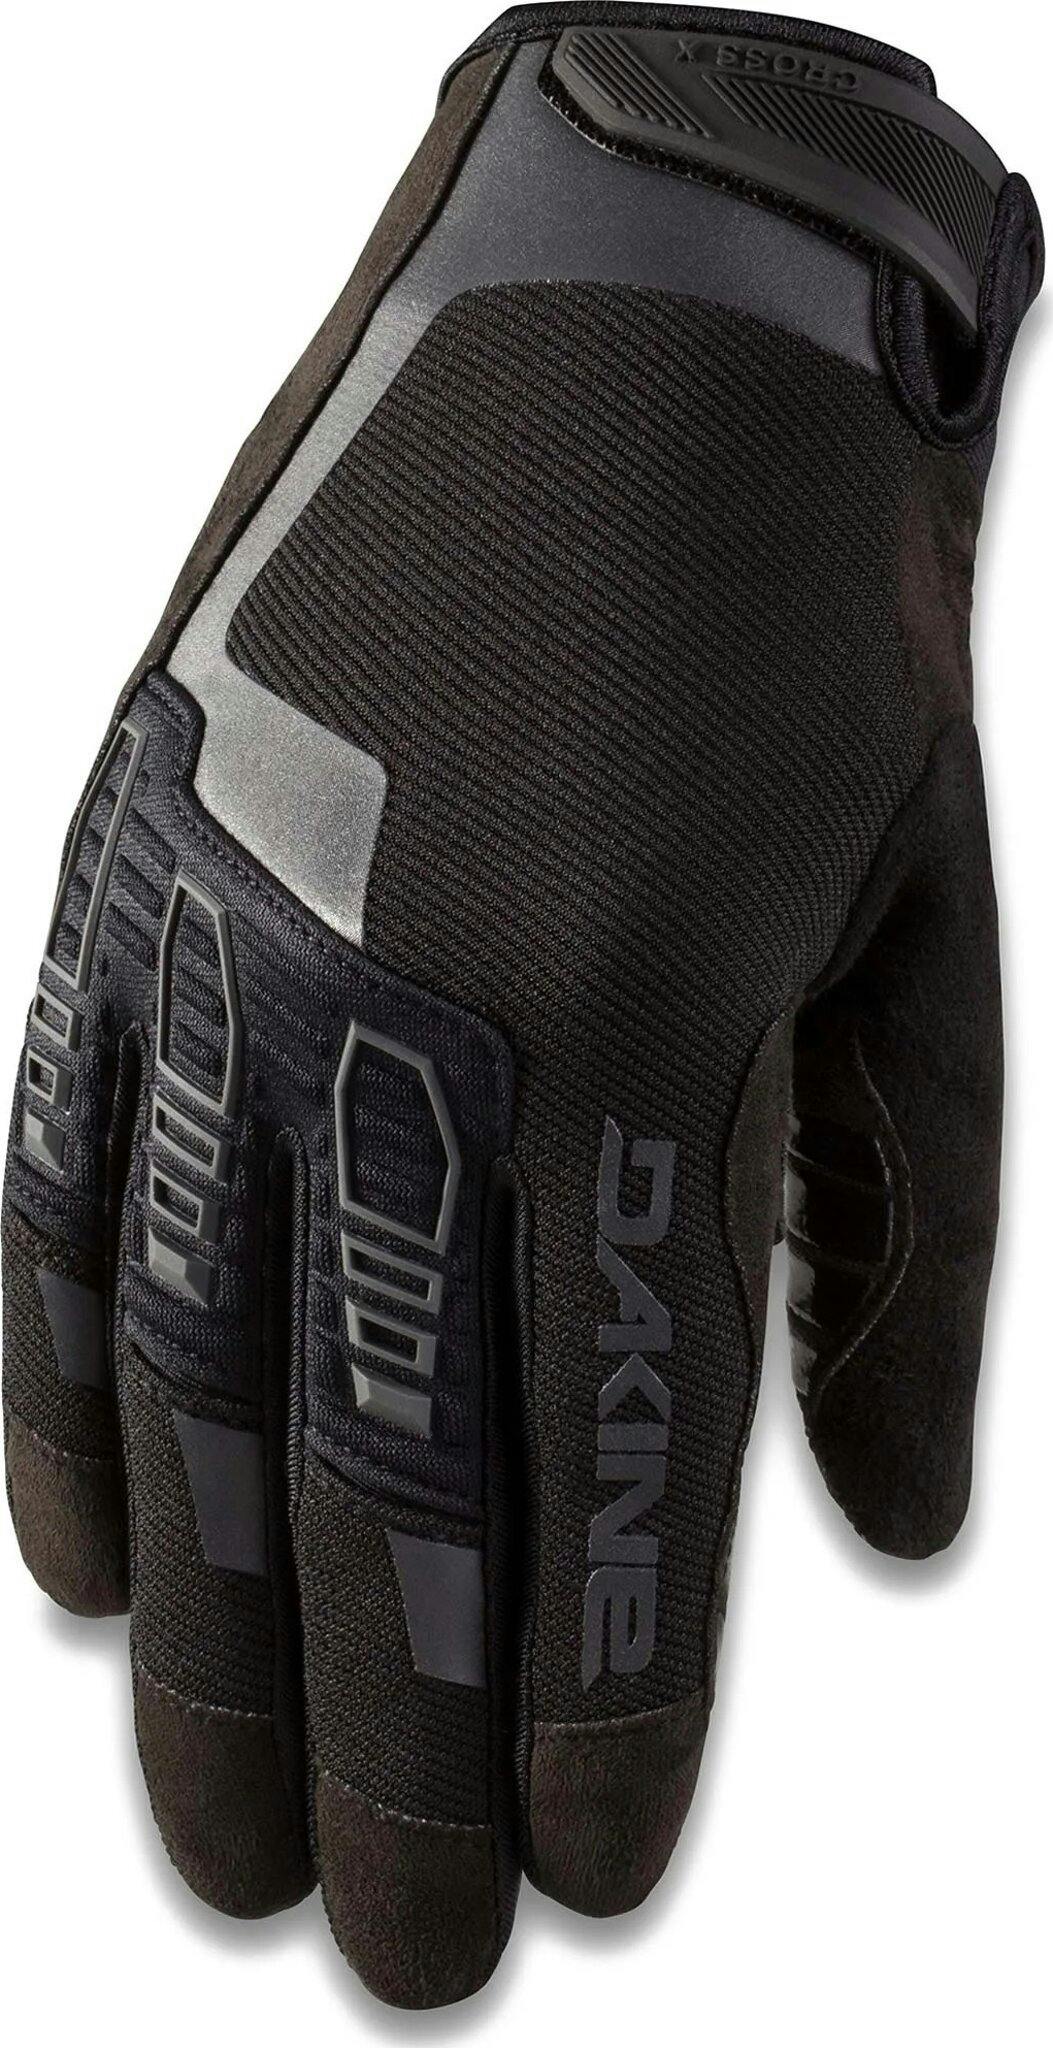 Product image for Cross-X Bike Gloves - Women's